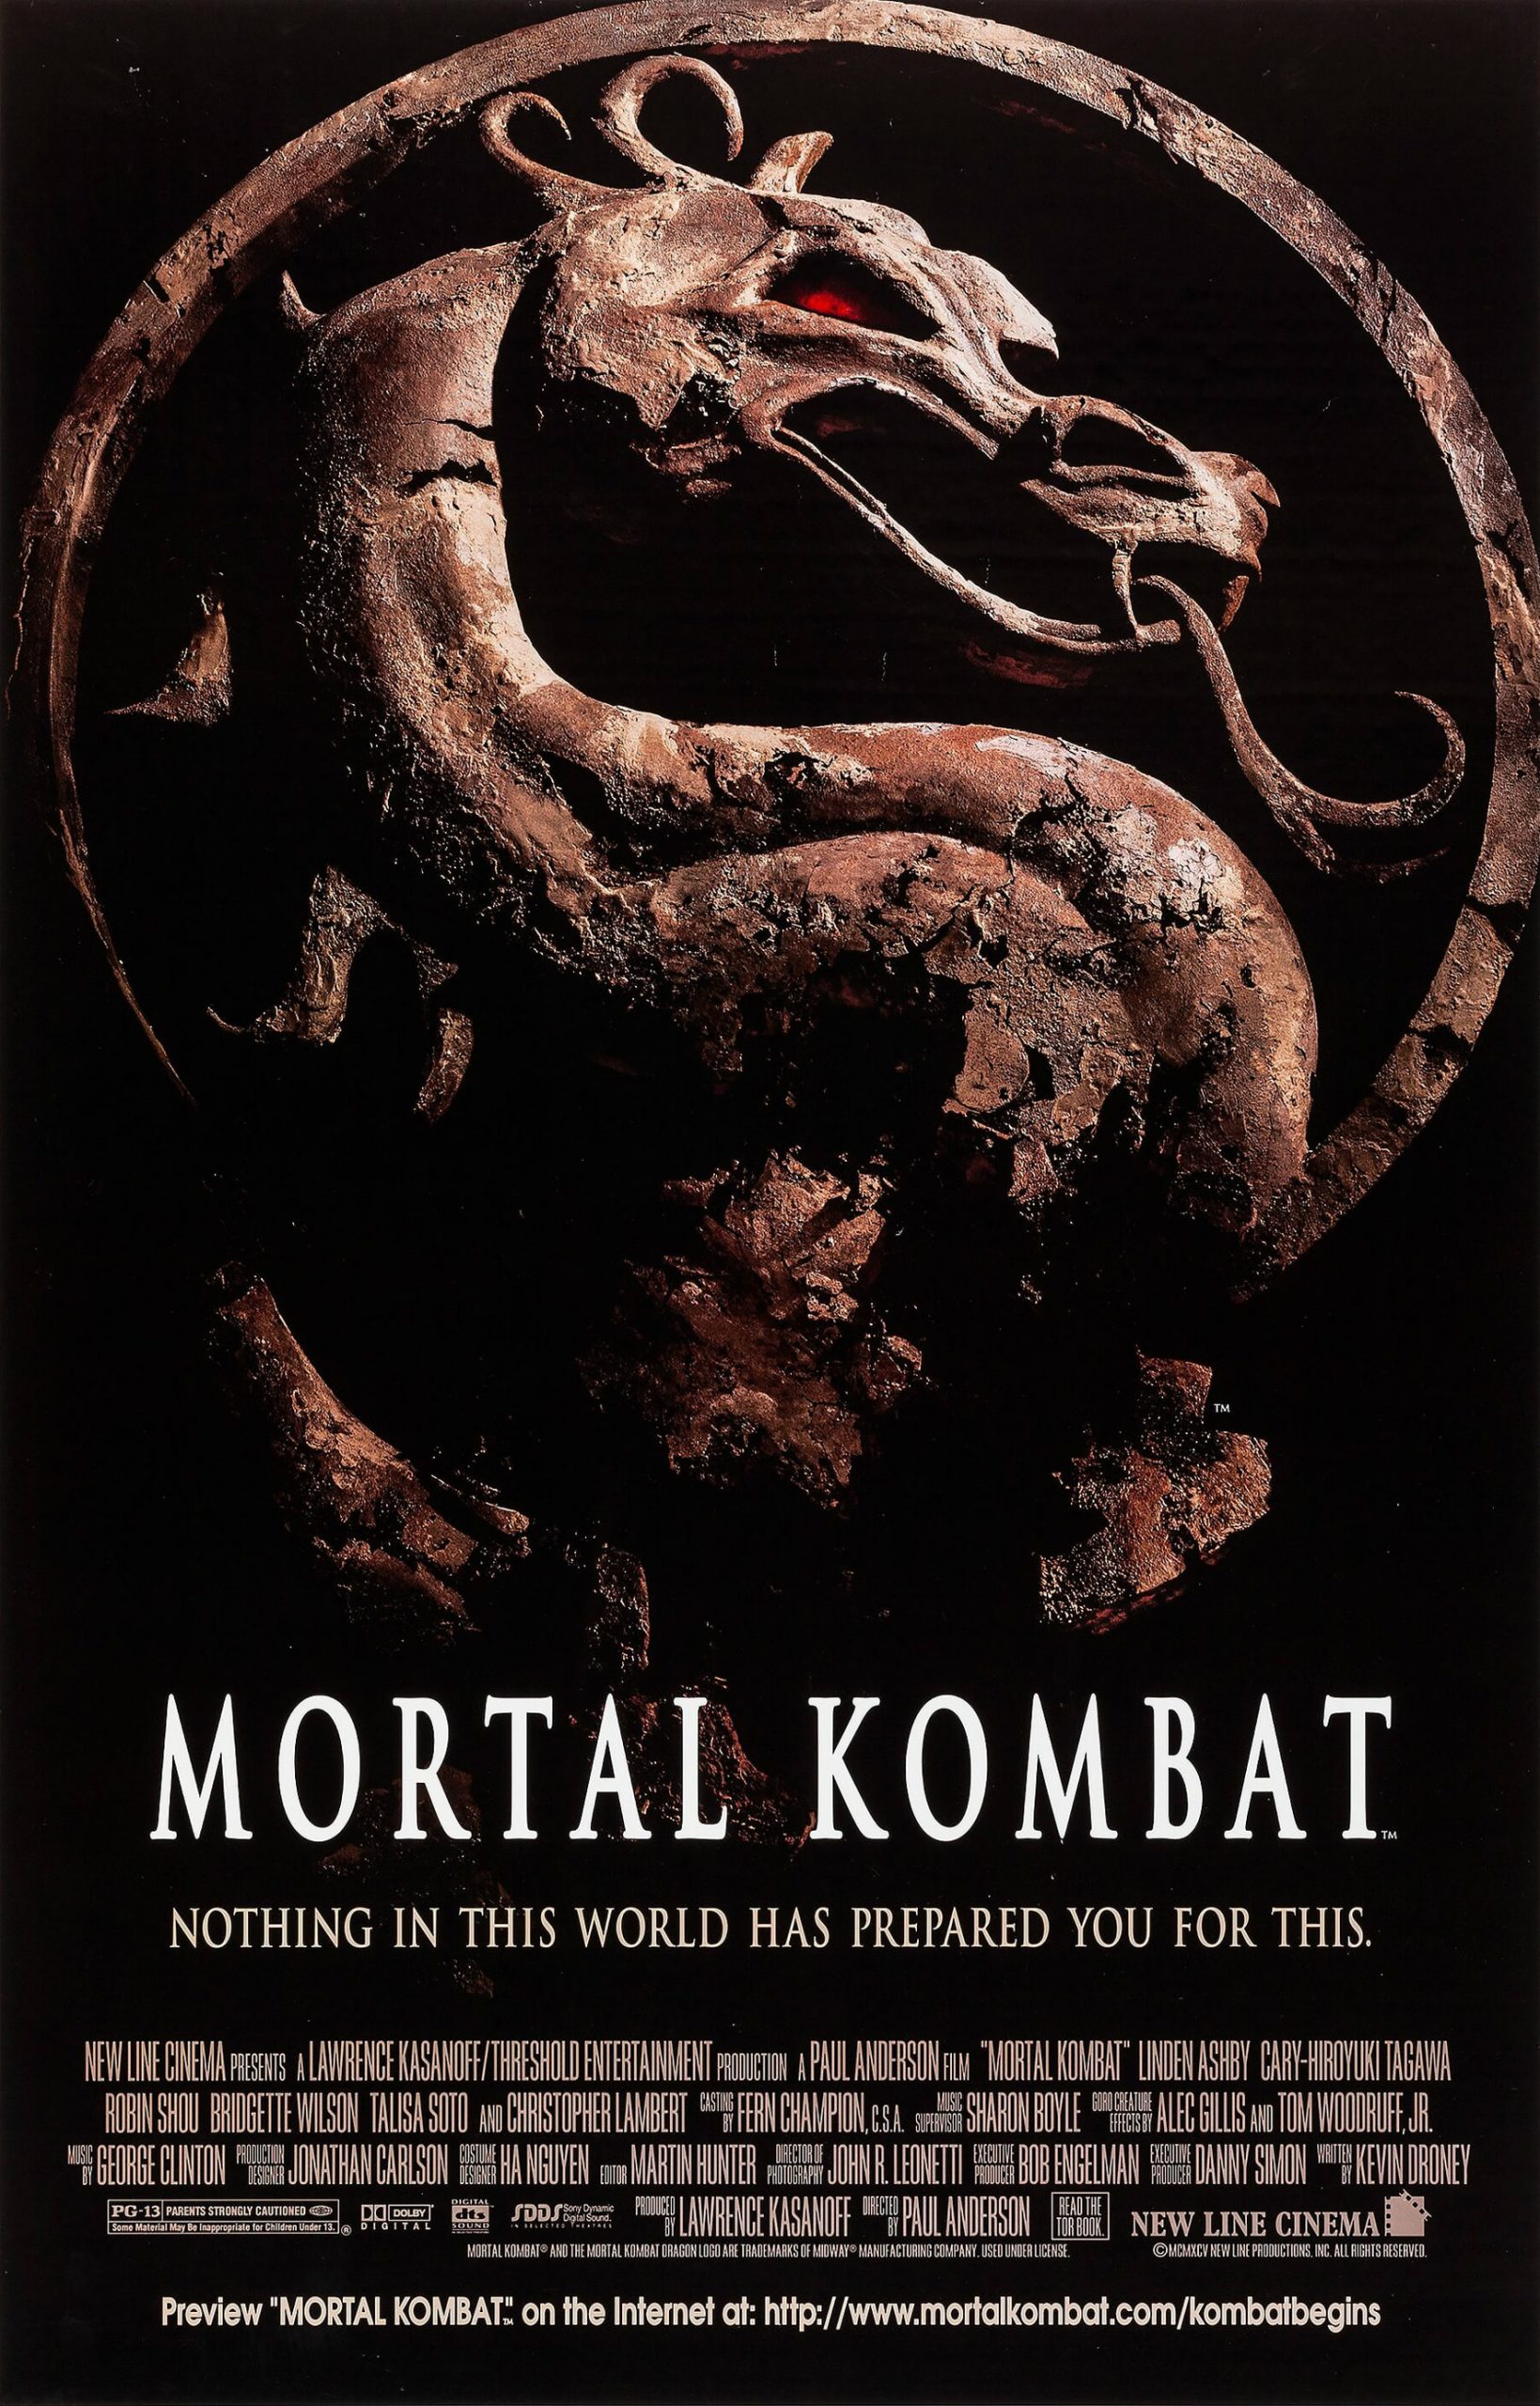 Mortal Kombat (1995) มอร์ทัล คอมแบ็ท นักสู้เหนือมนุษย์